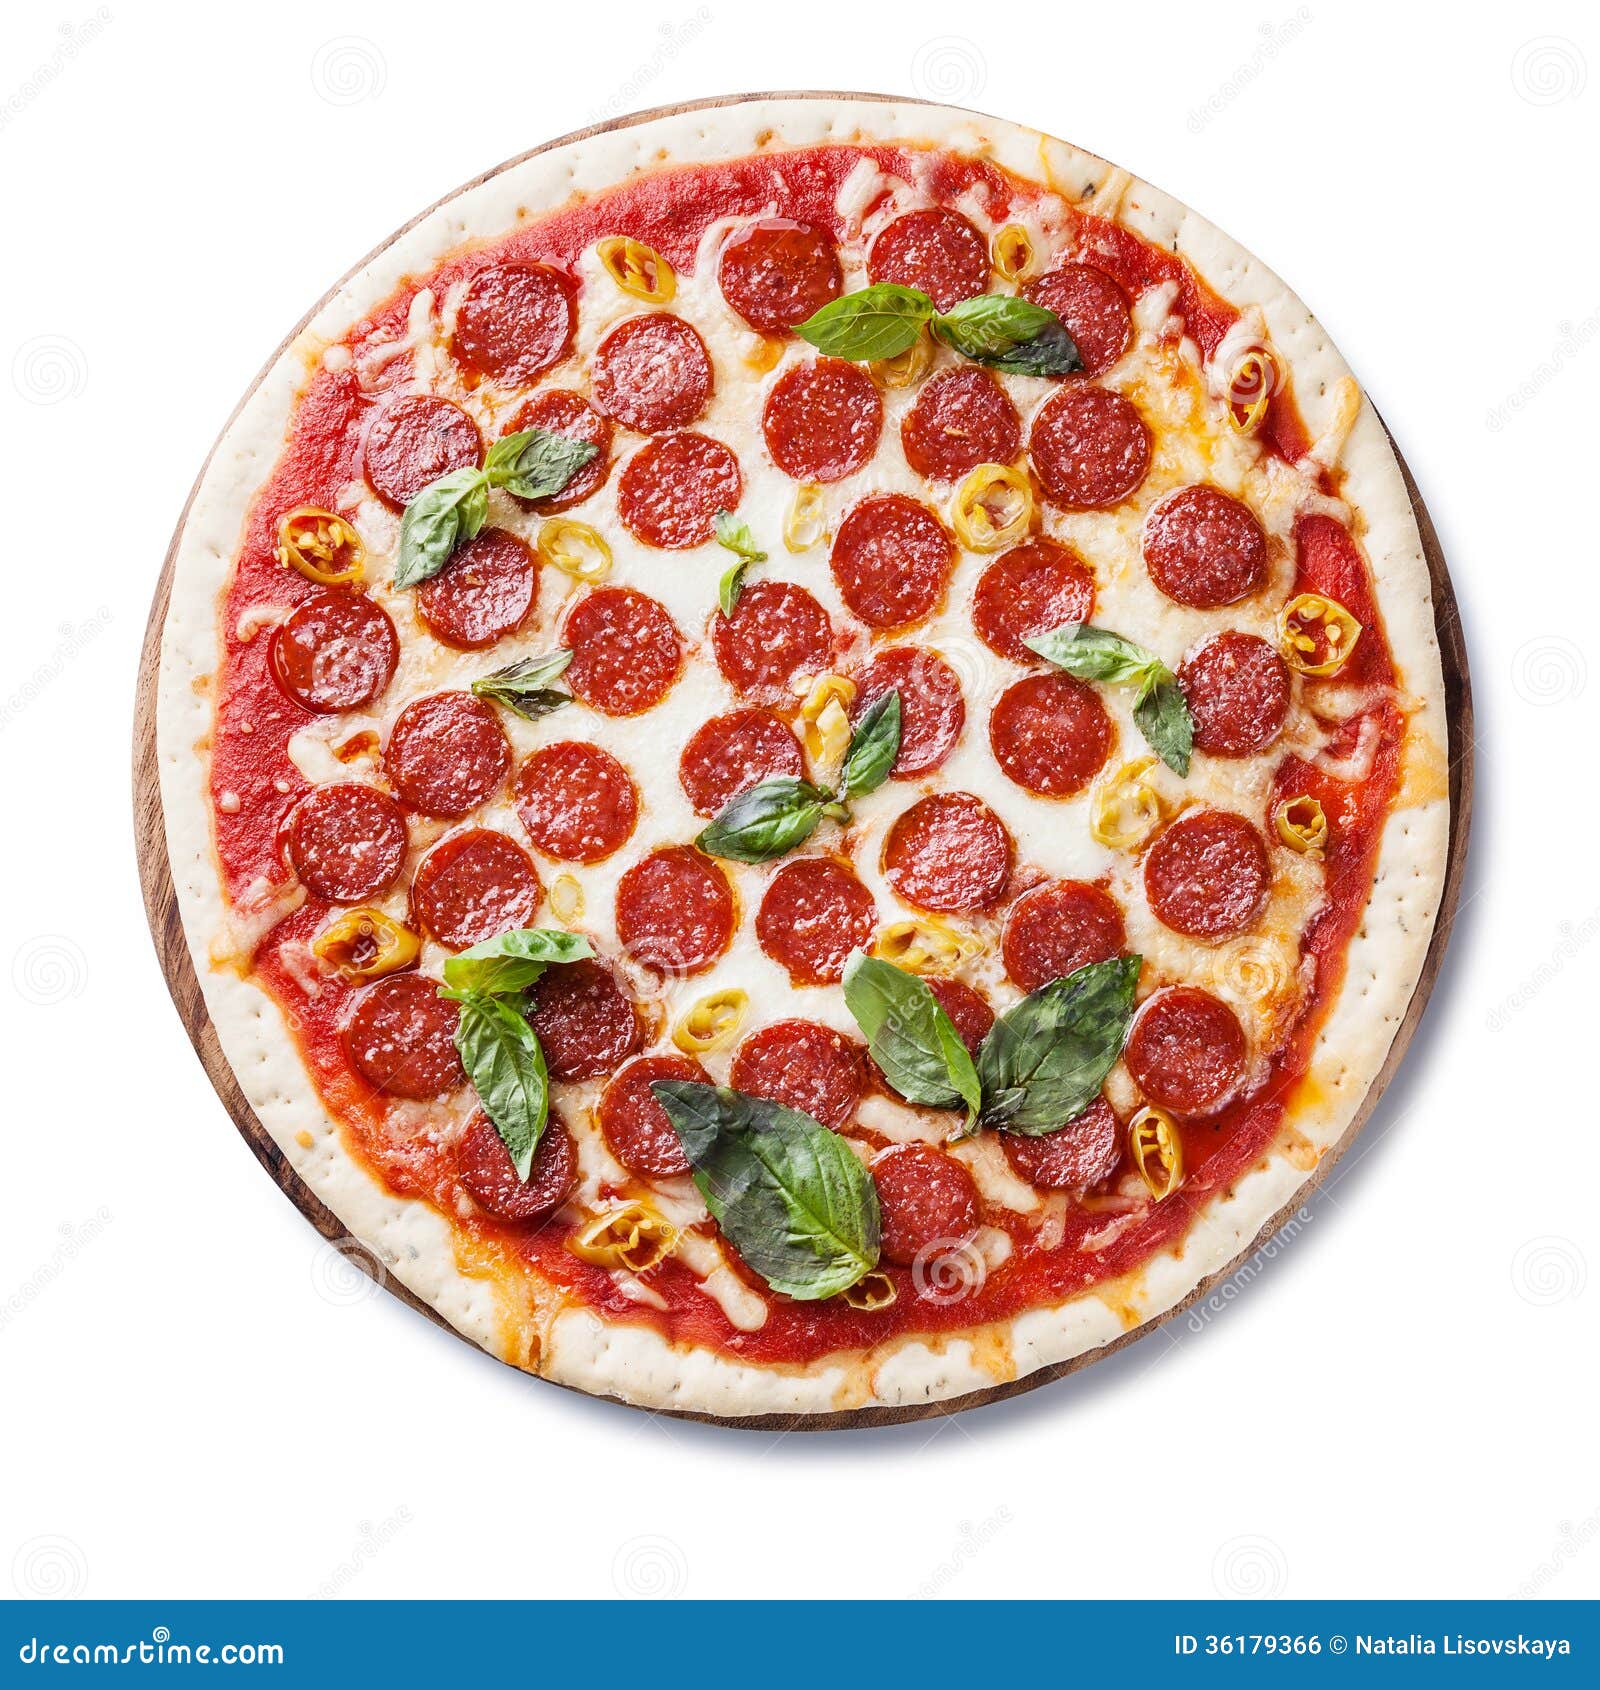 фото пиццы на белом фоне пепперони фото 29